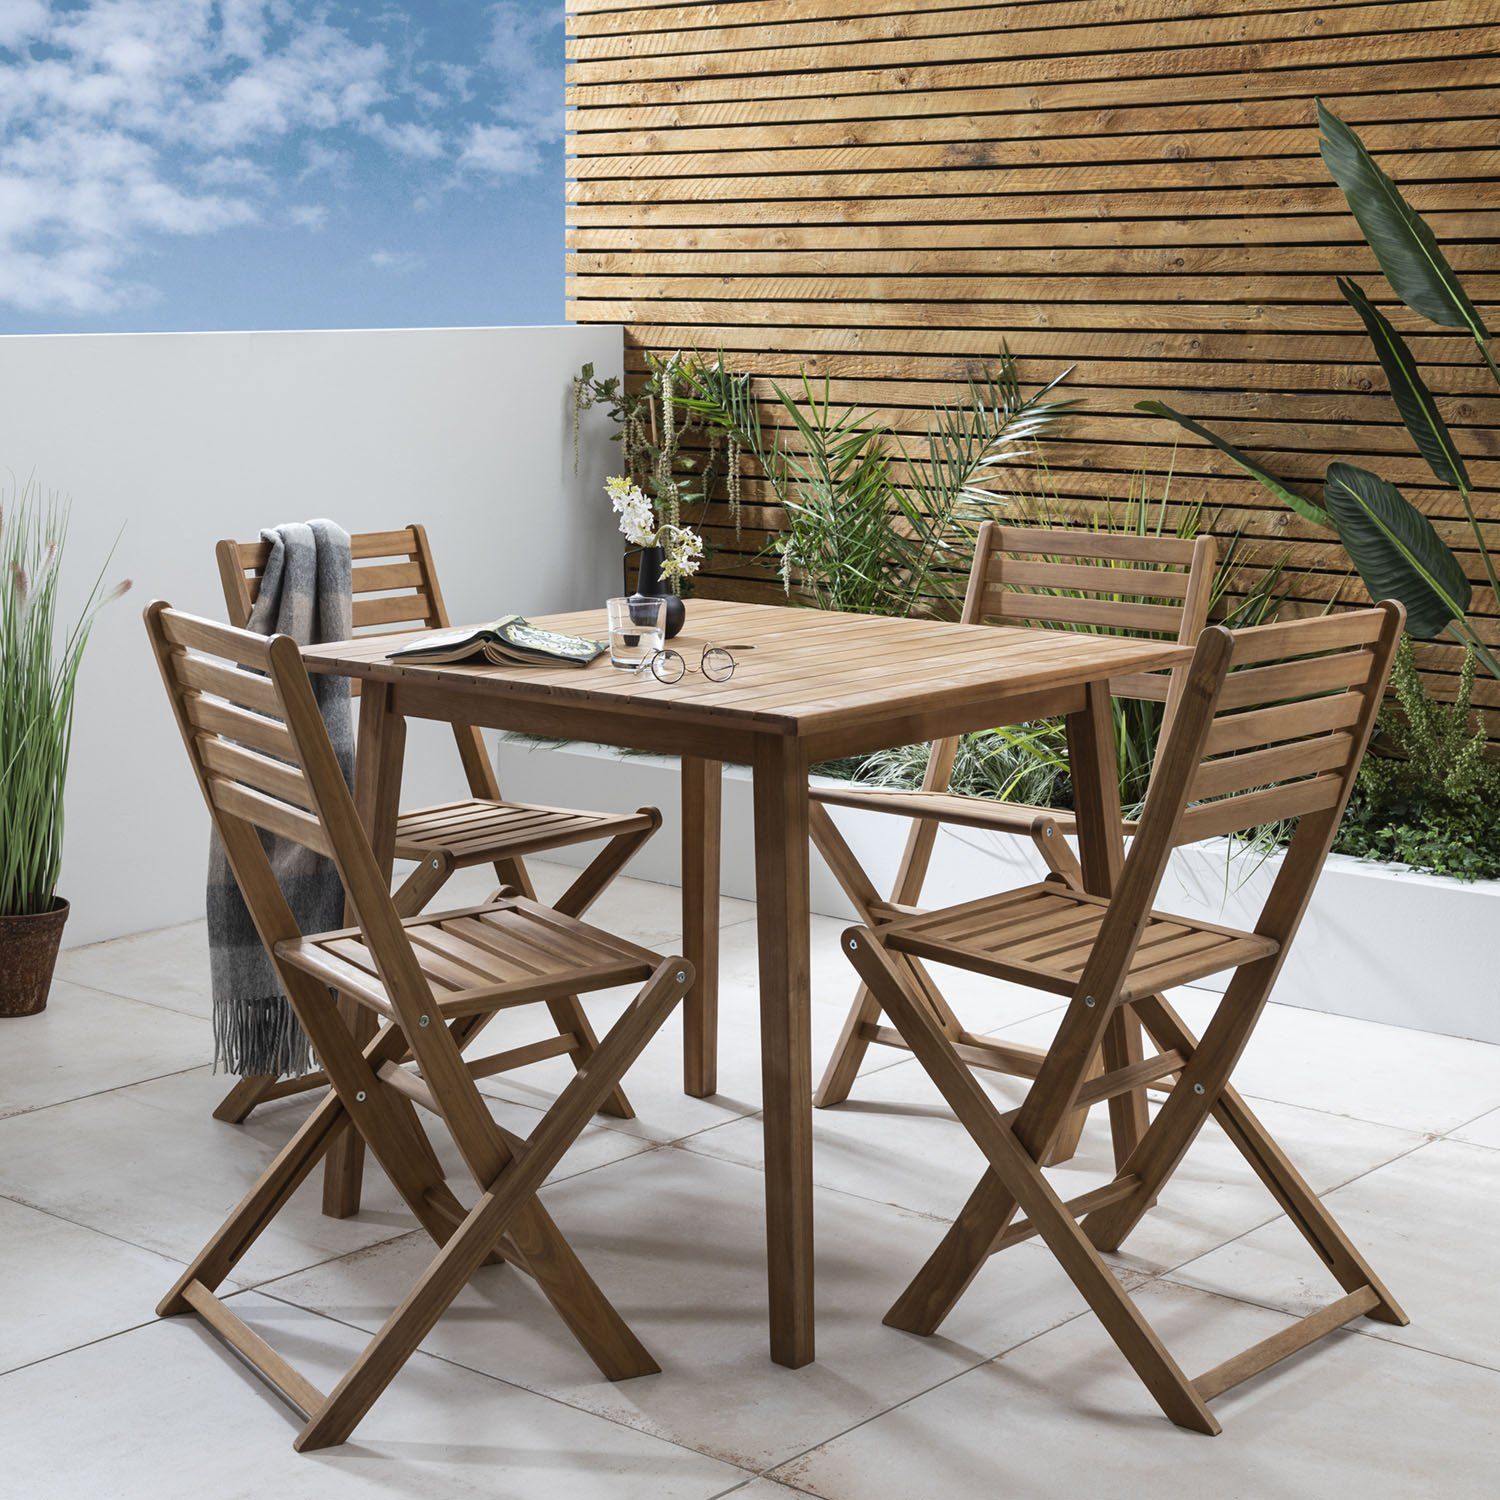 Ackley wooden garden furniture – 4 seater outdoor dining set with cream premium parasol - Laura James